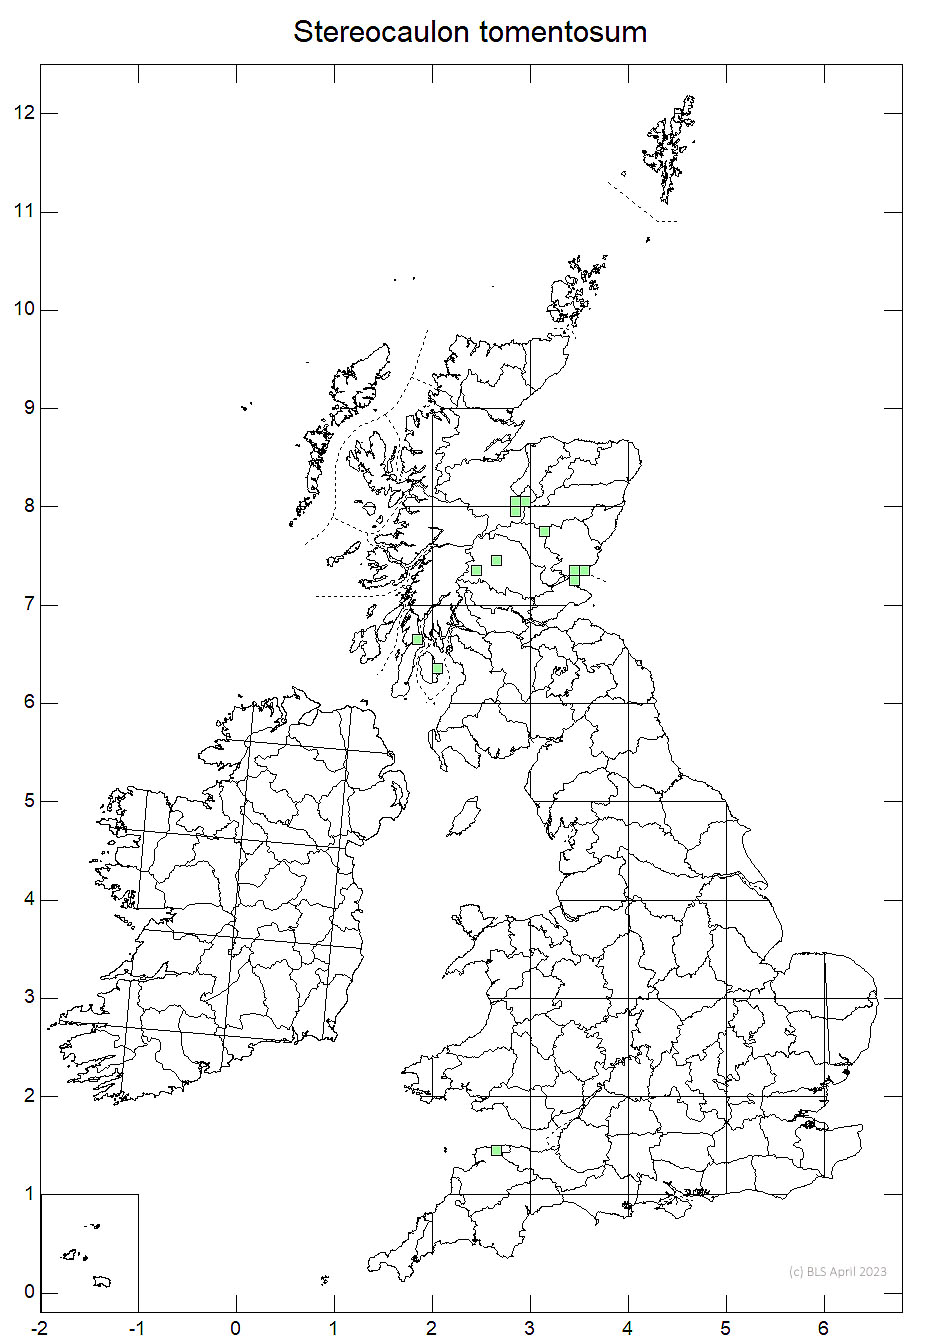 Stereocaulon tomentosum 10km sq distribution map